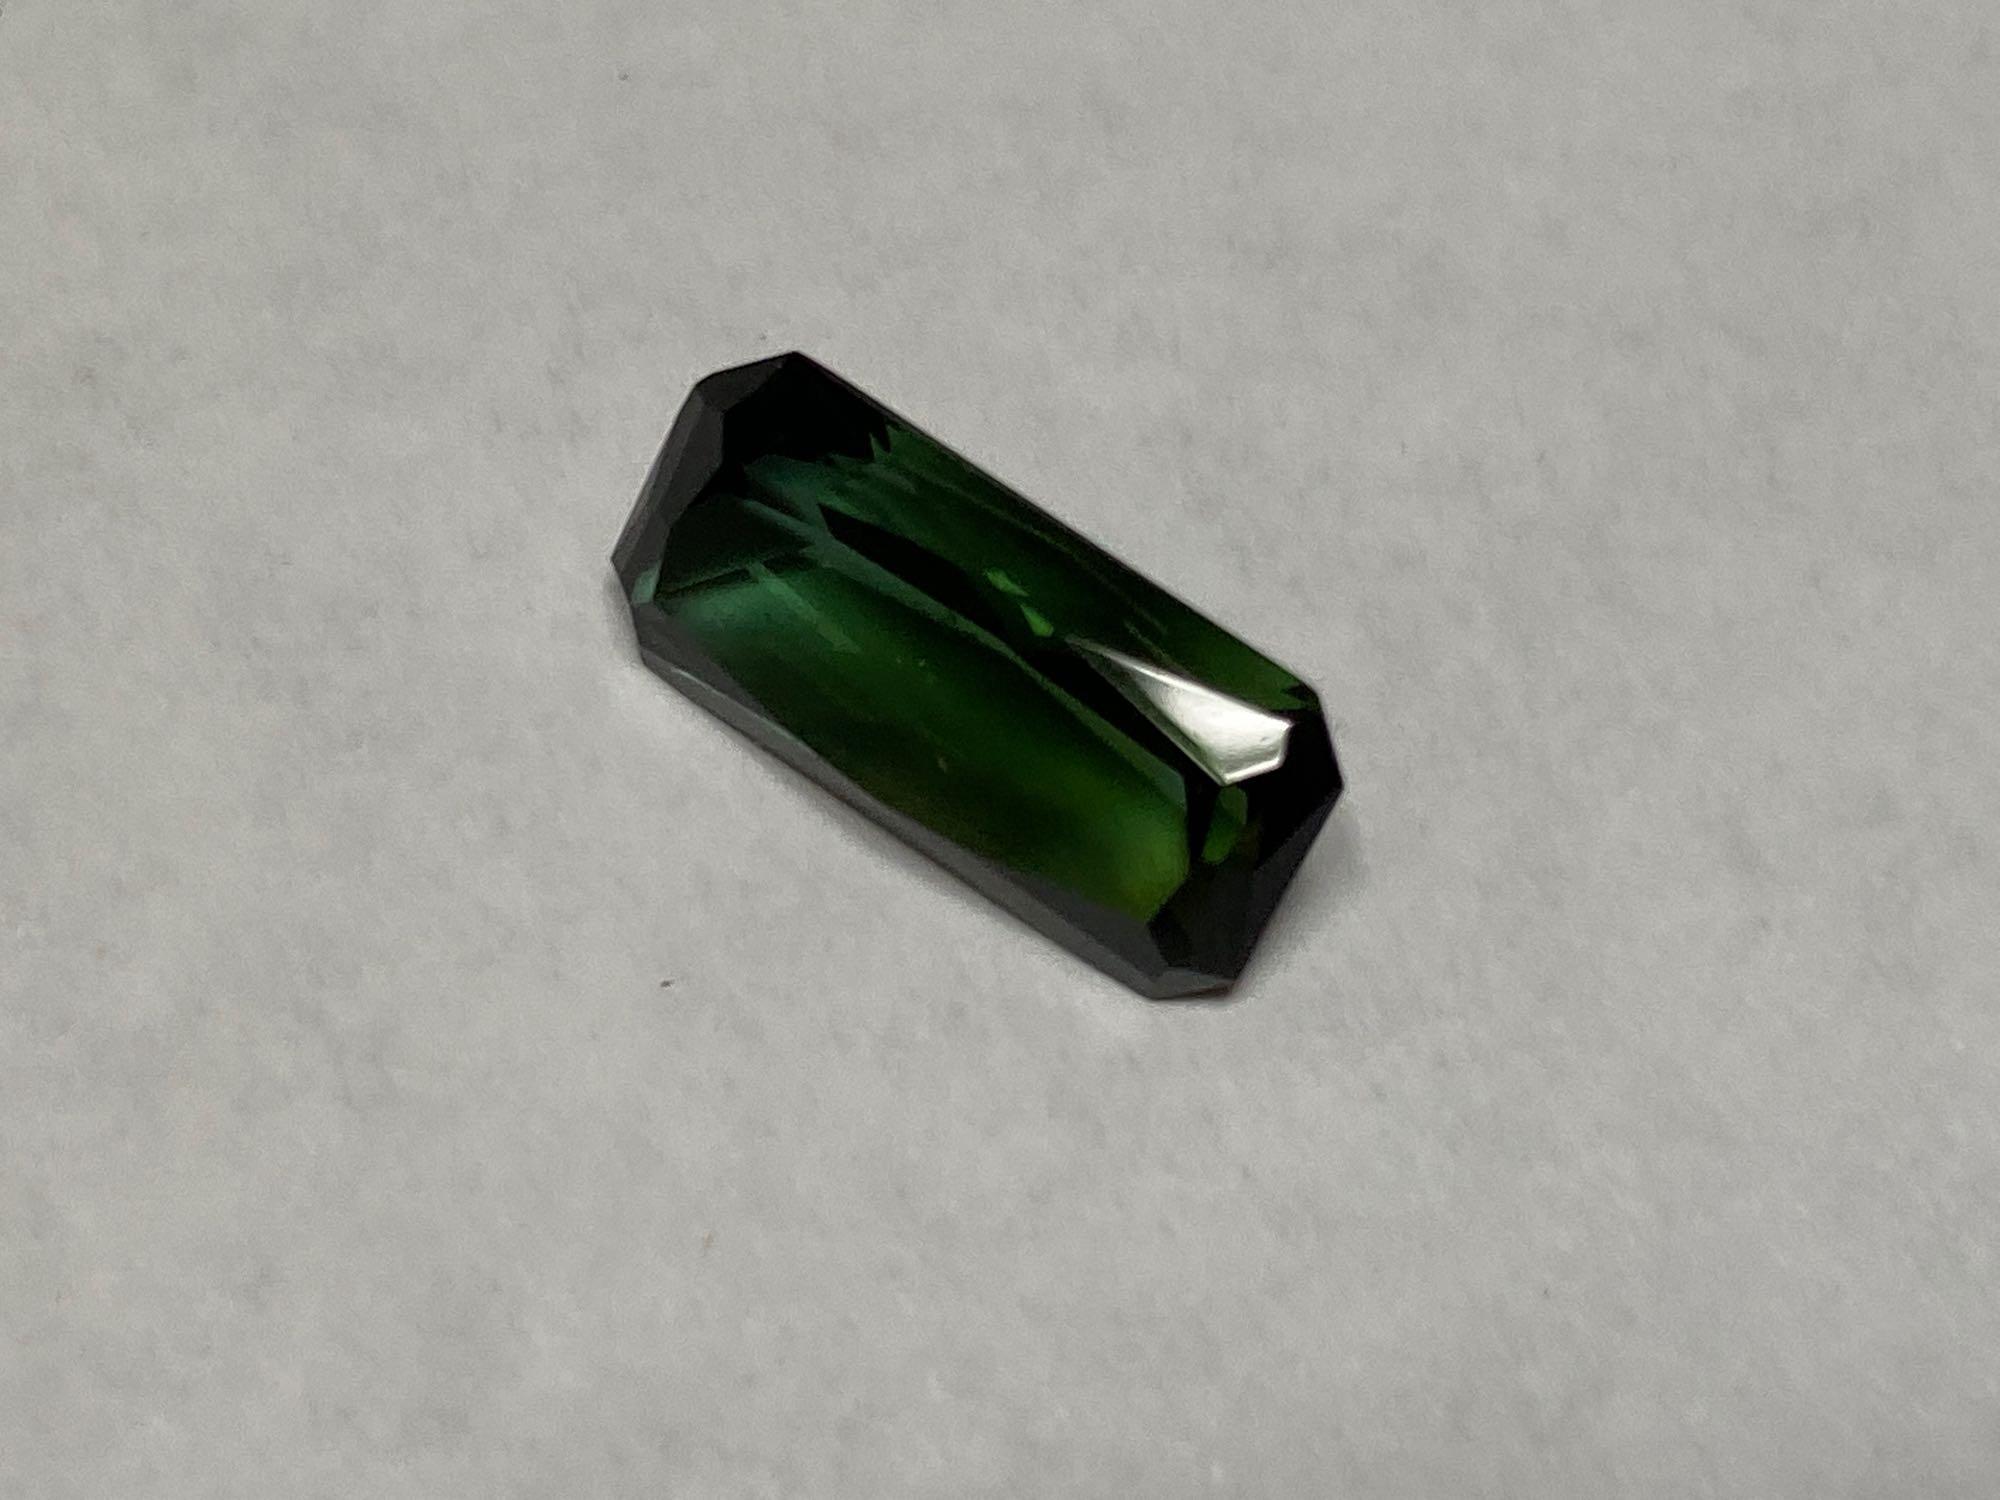 Gems & Jewels, says Blue, Pink, & Green Tourmaline